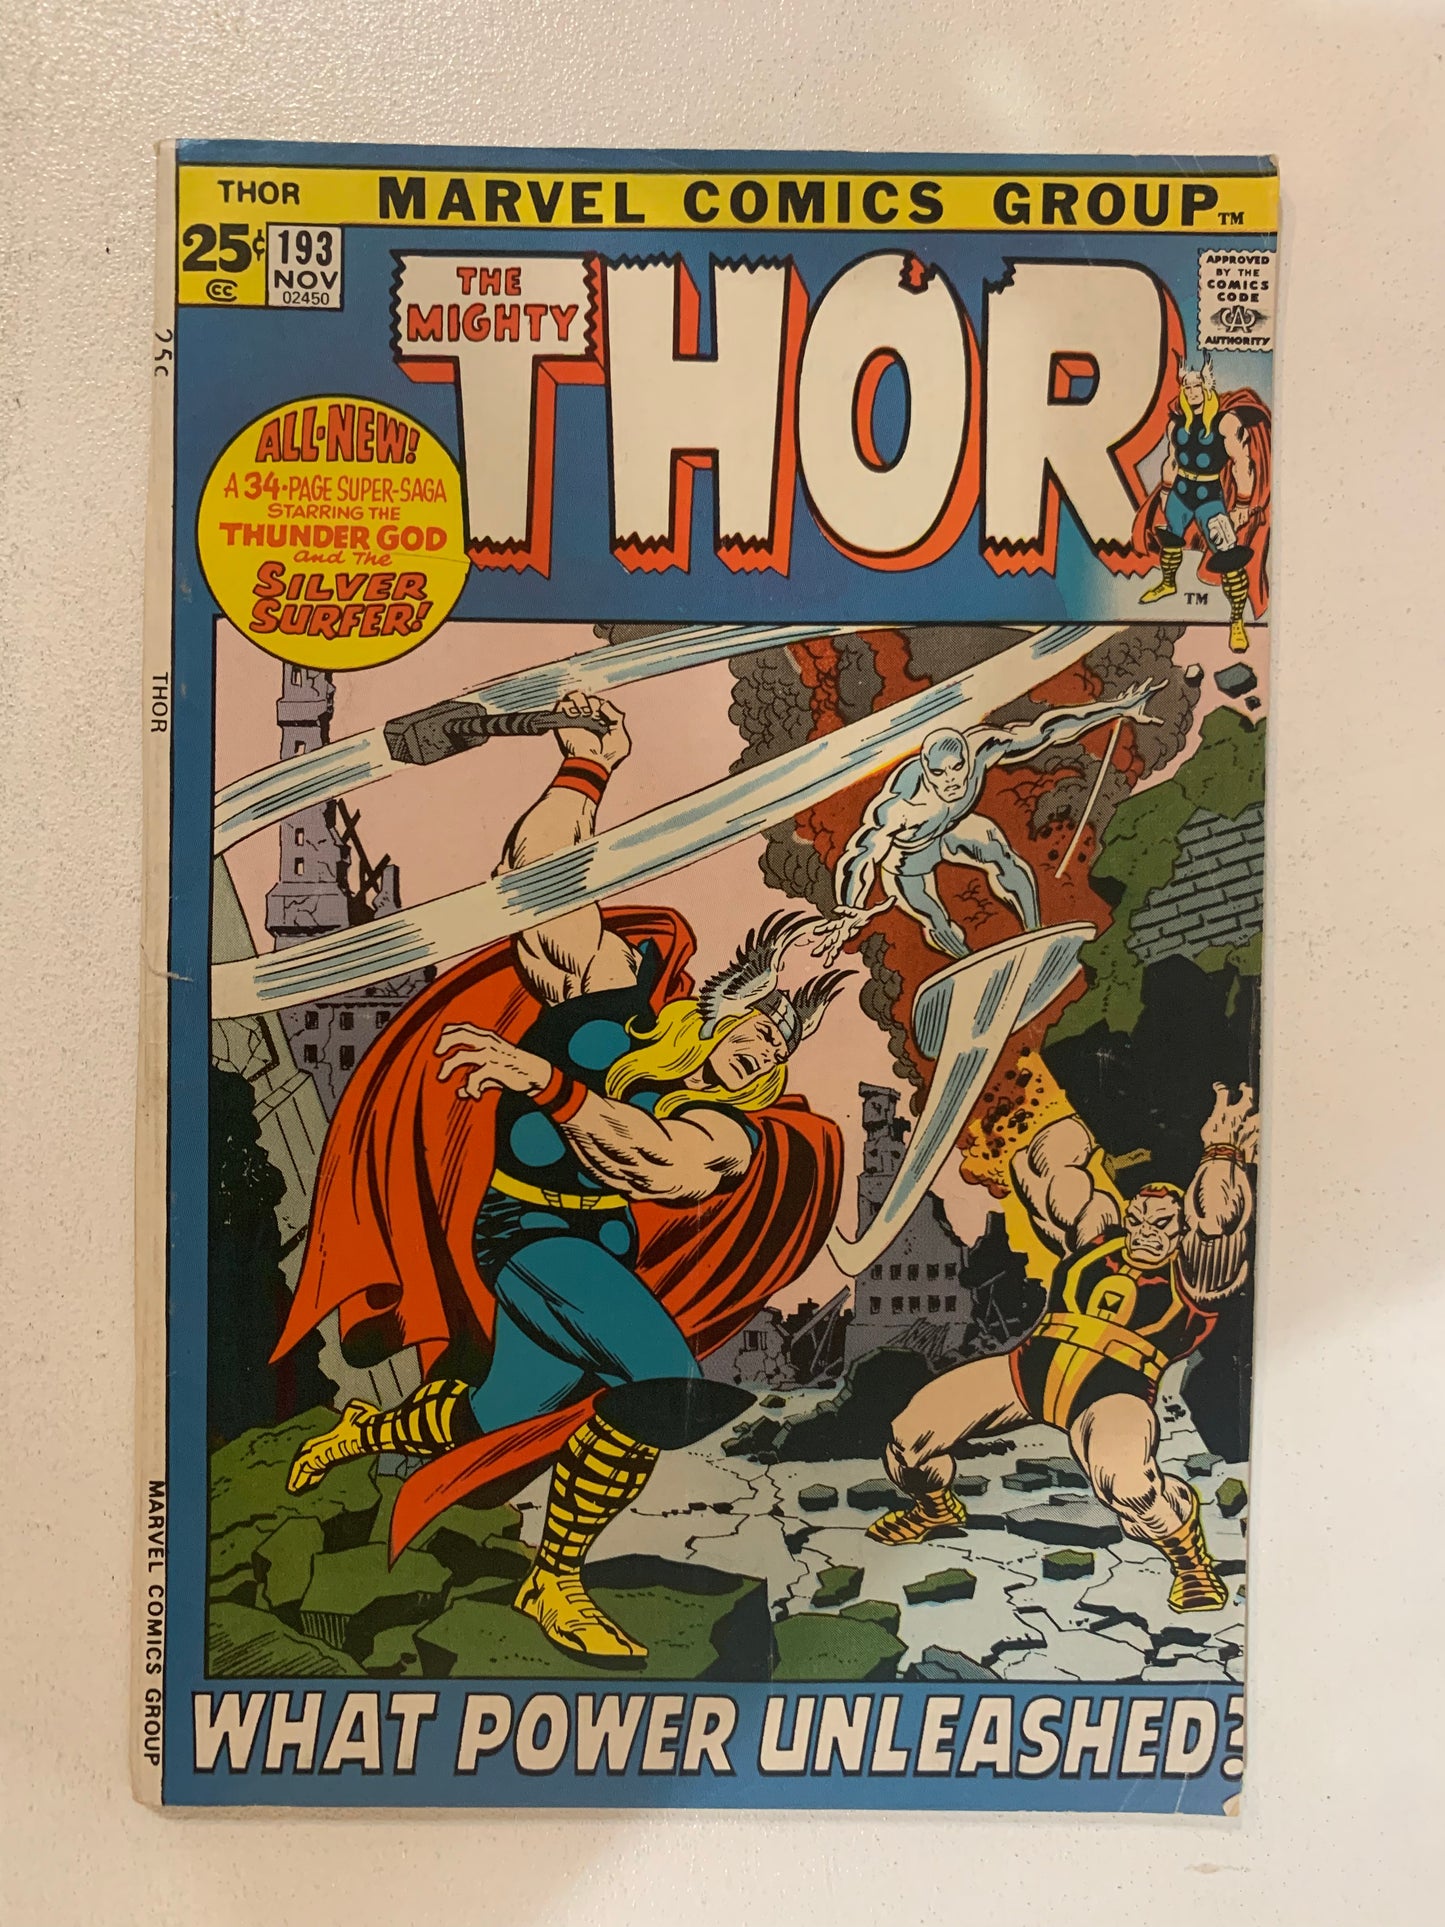 Thor #193